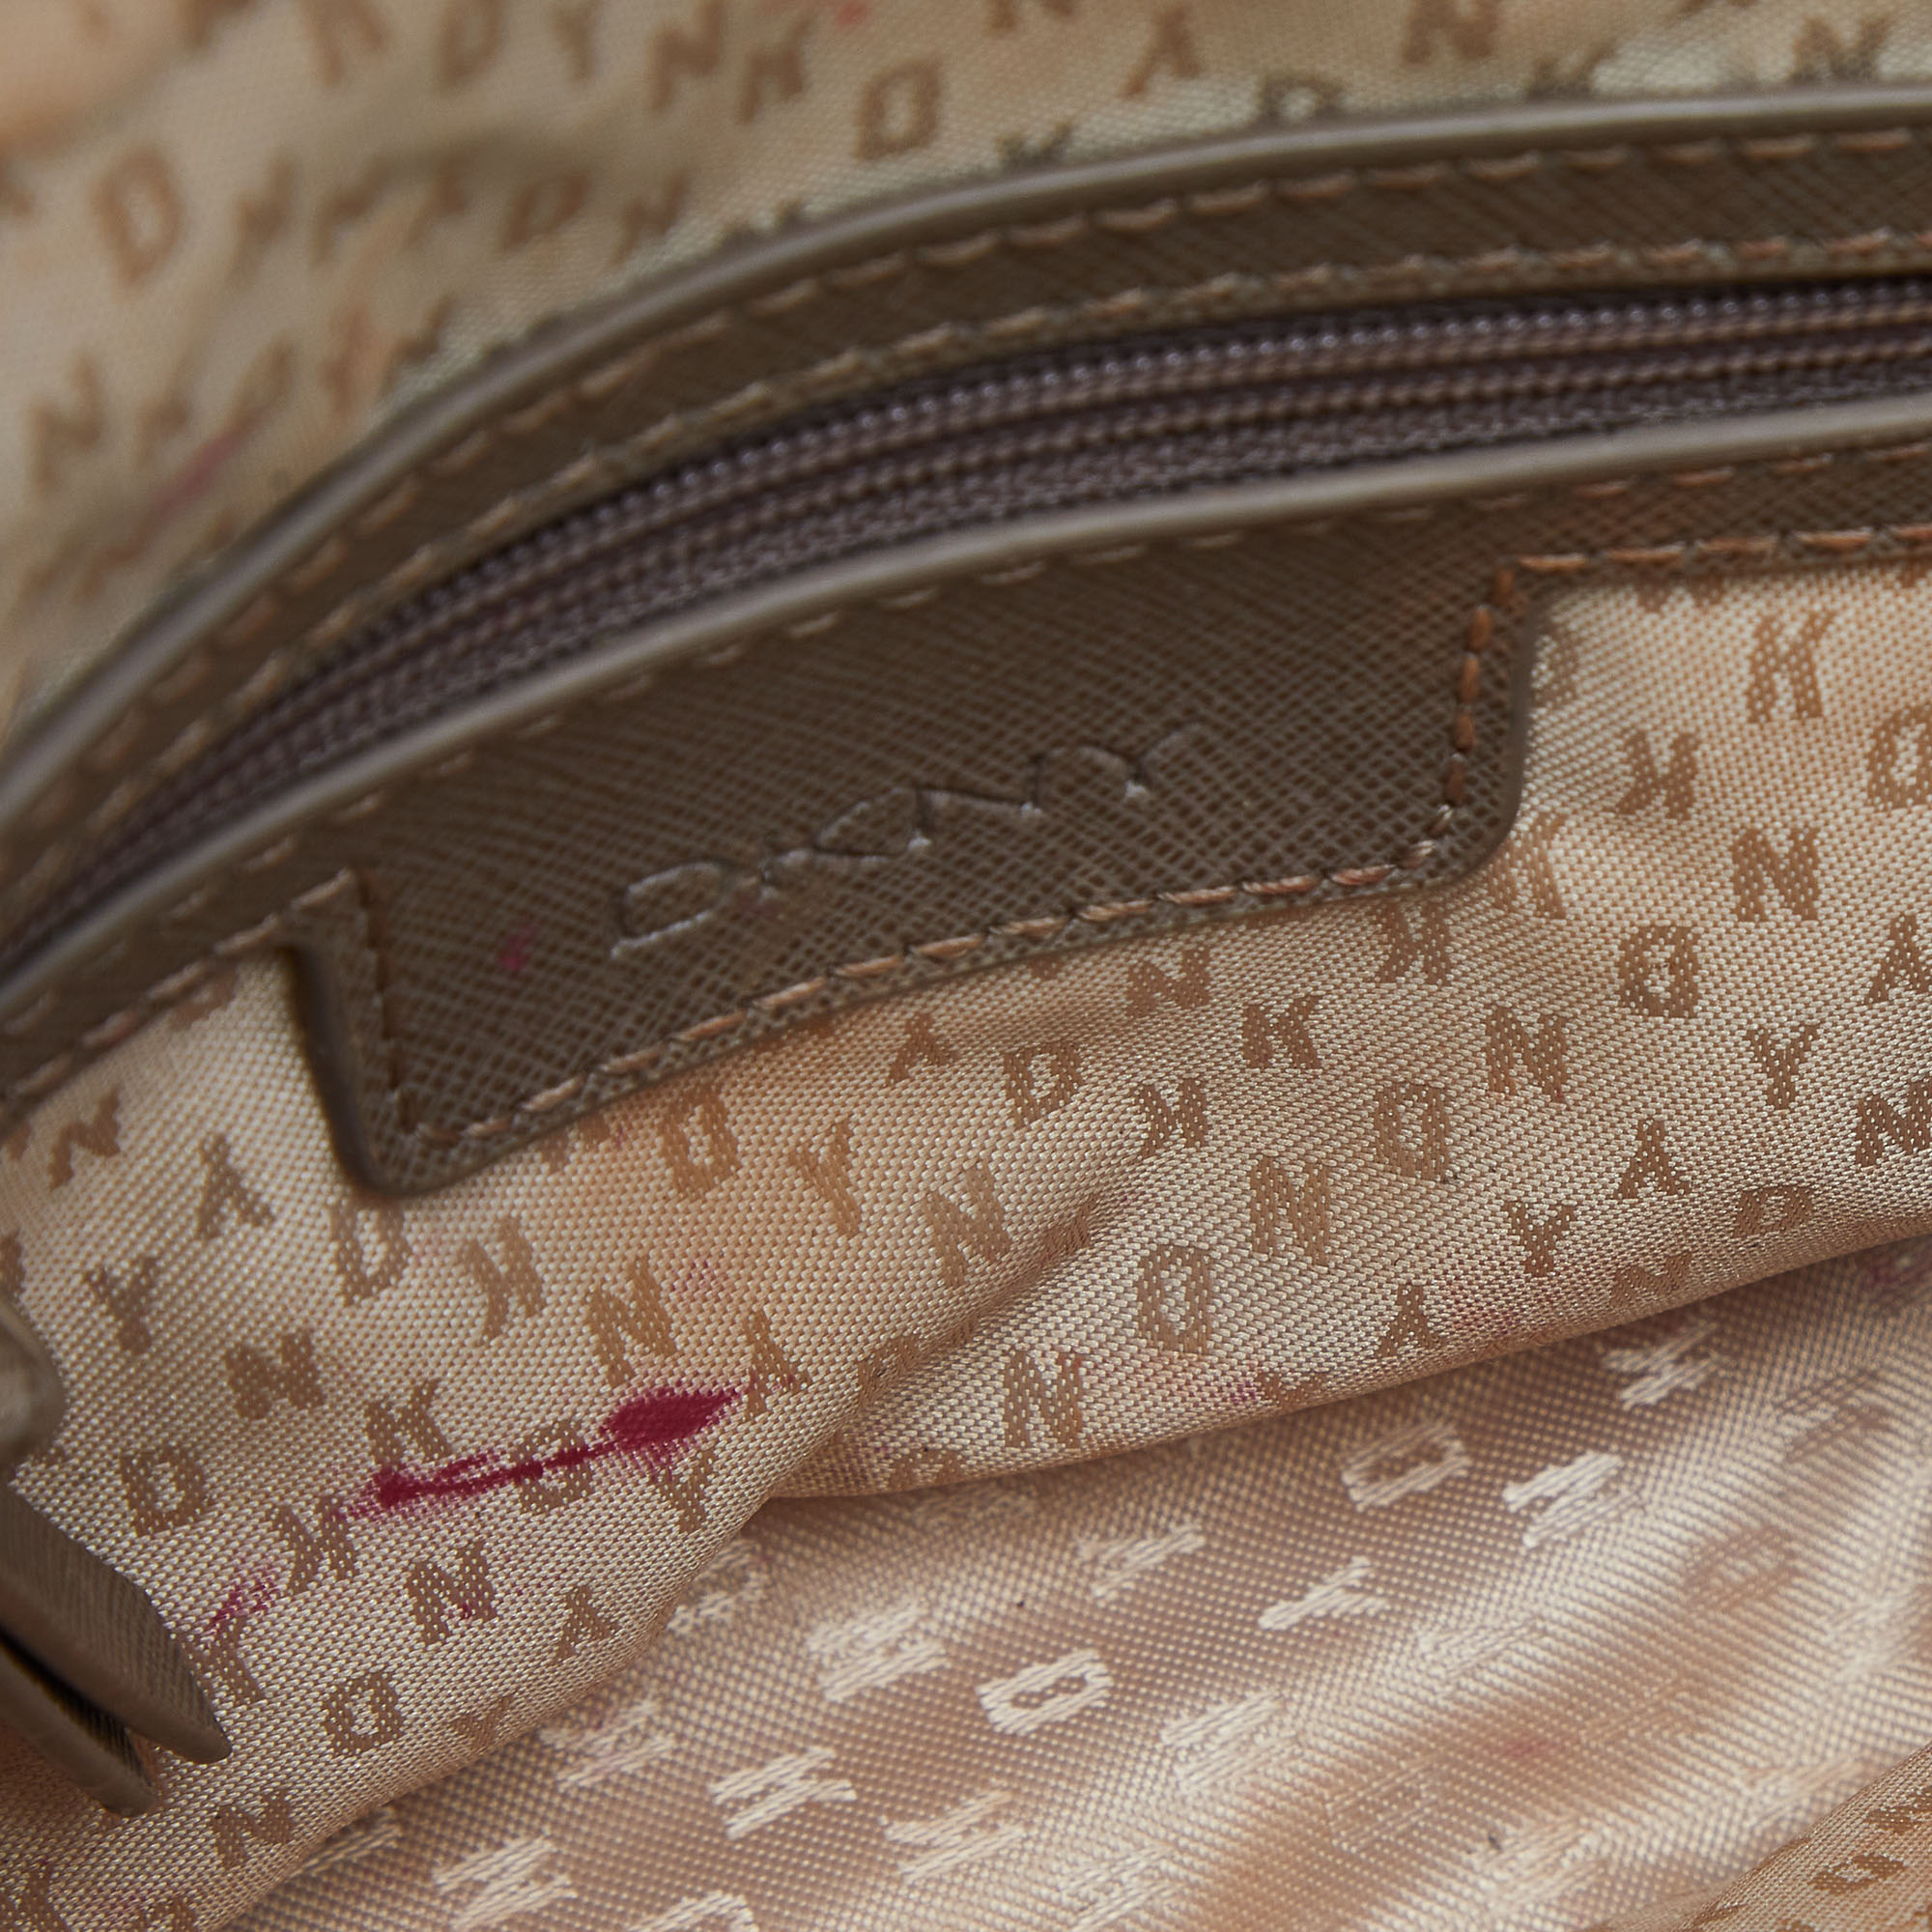 DKNY Beige/Pink Leather Bryant Park Flap Crossbody Bag